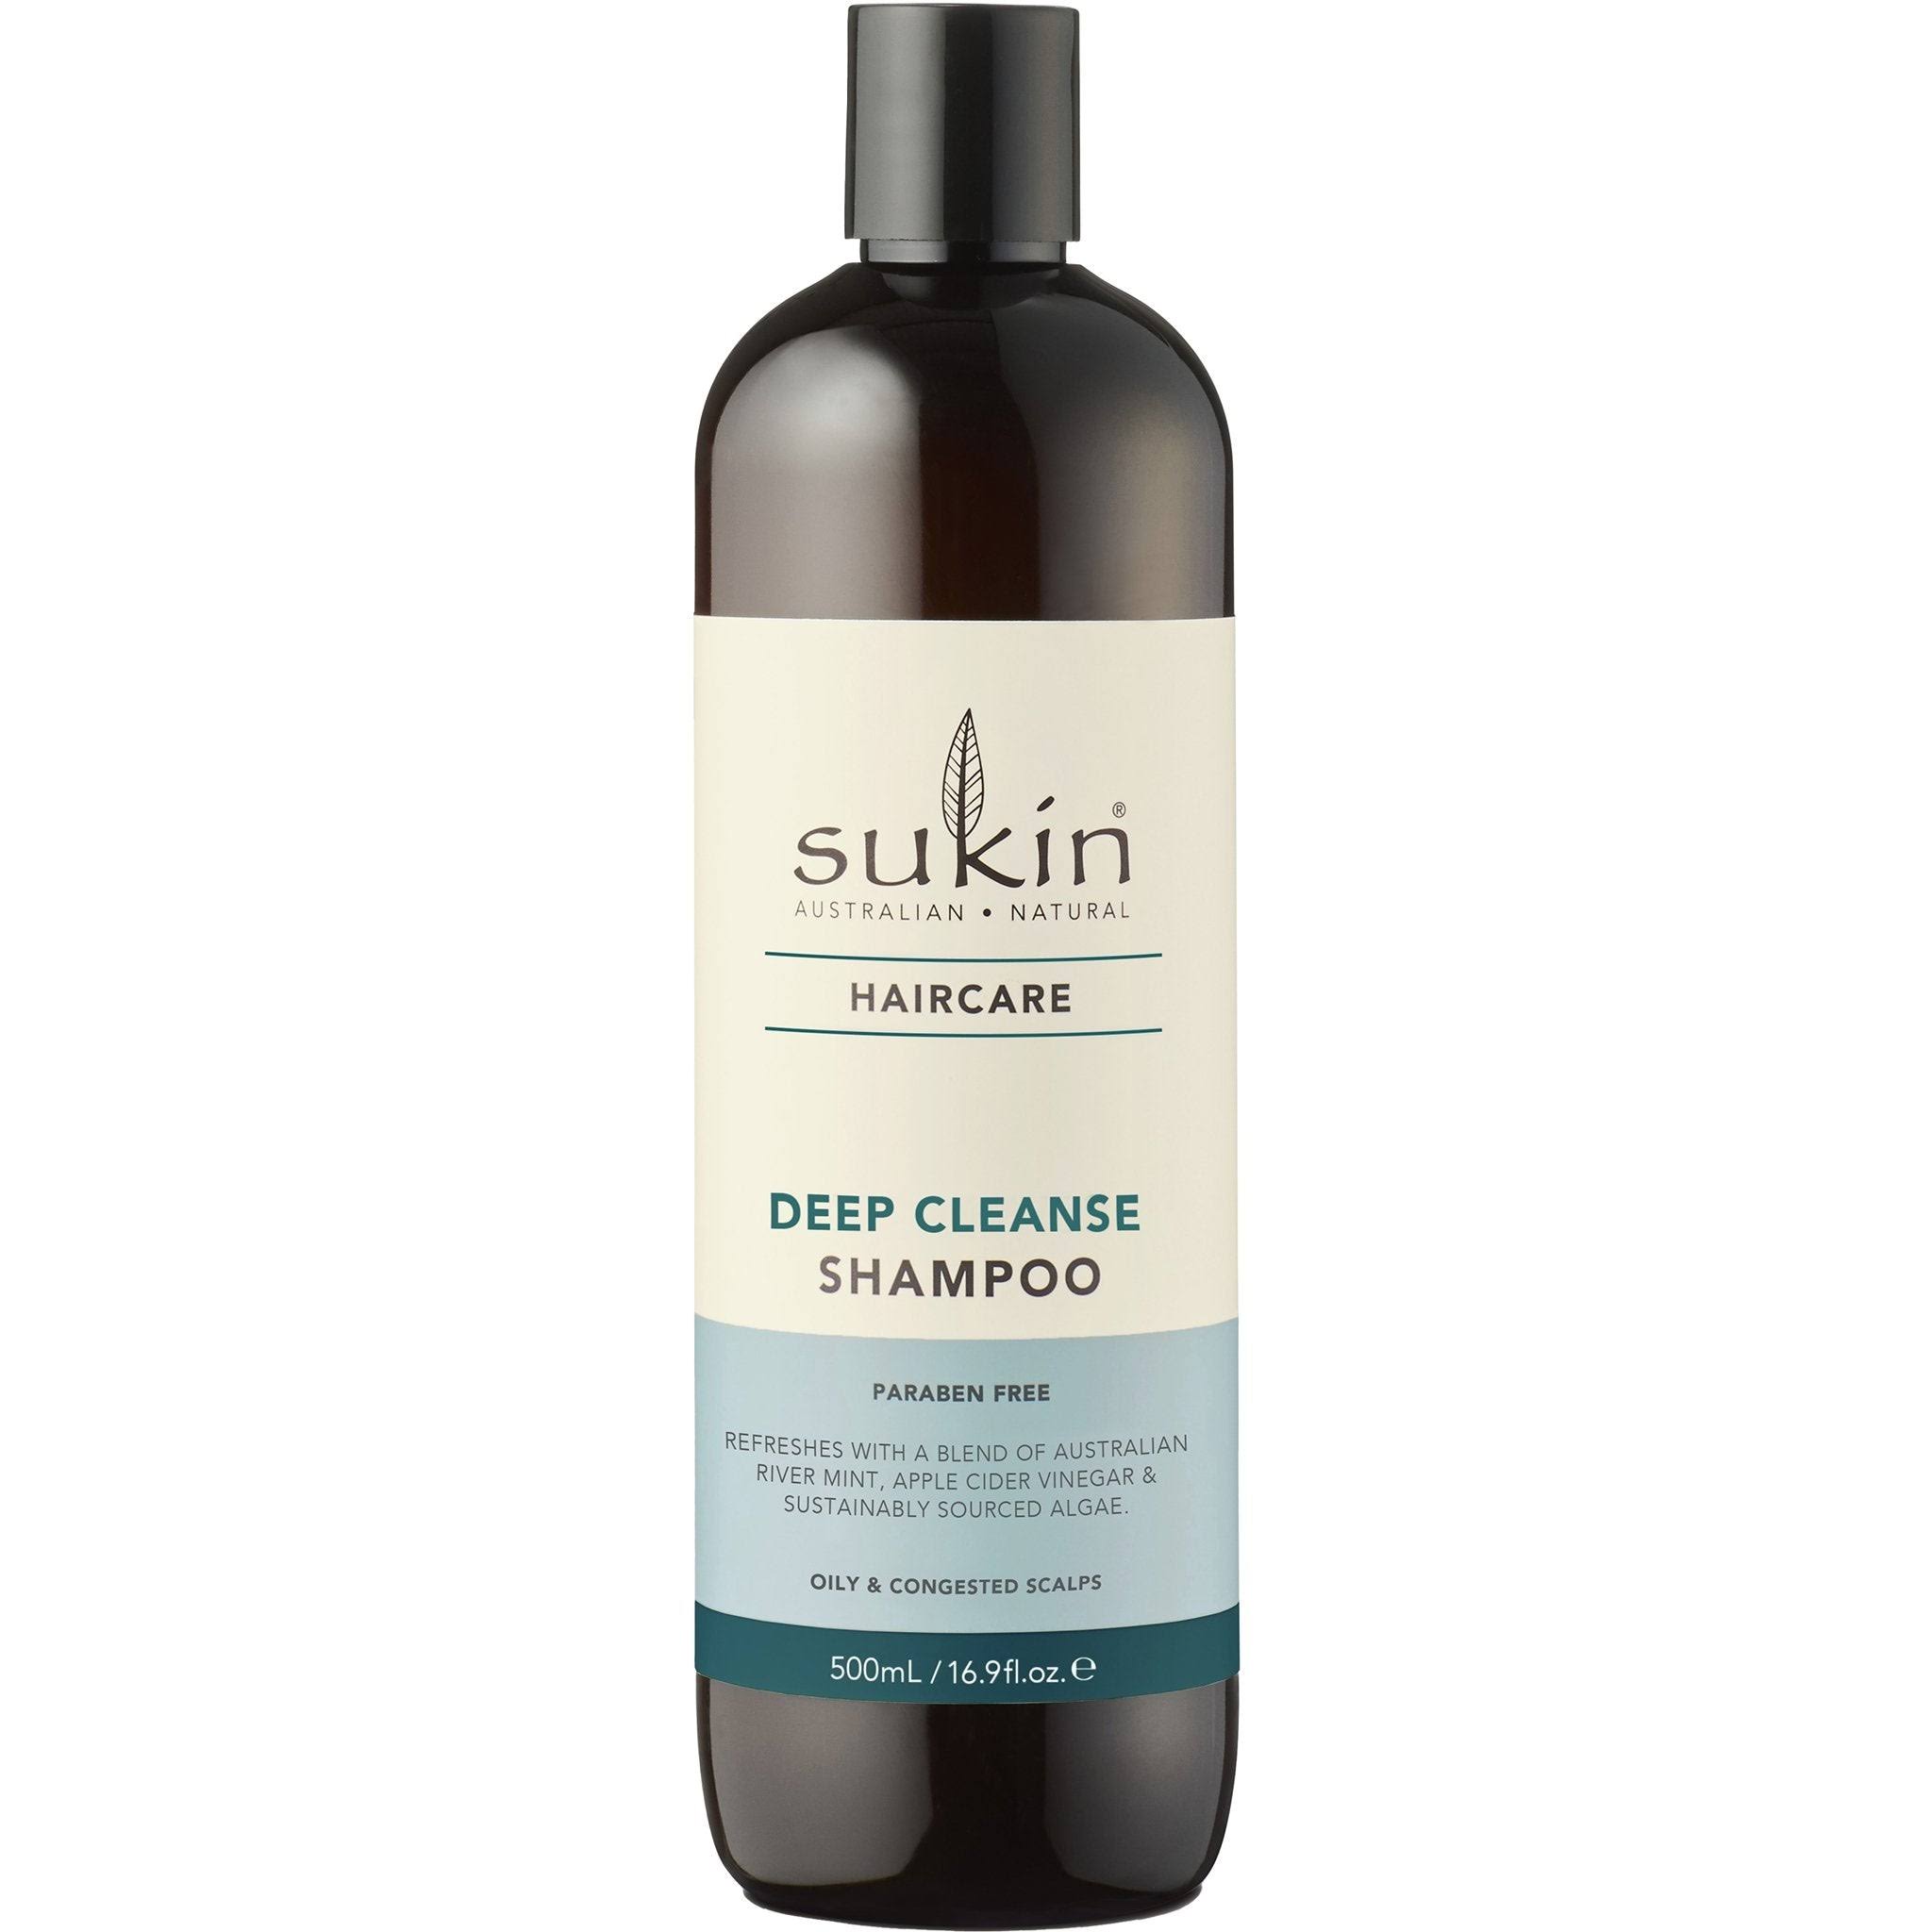 Sukin Deep Cleanse Shampoo - 16.9 fl oz